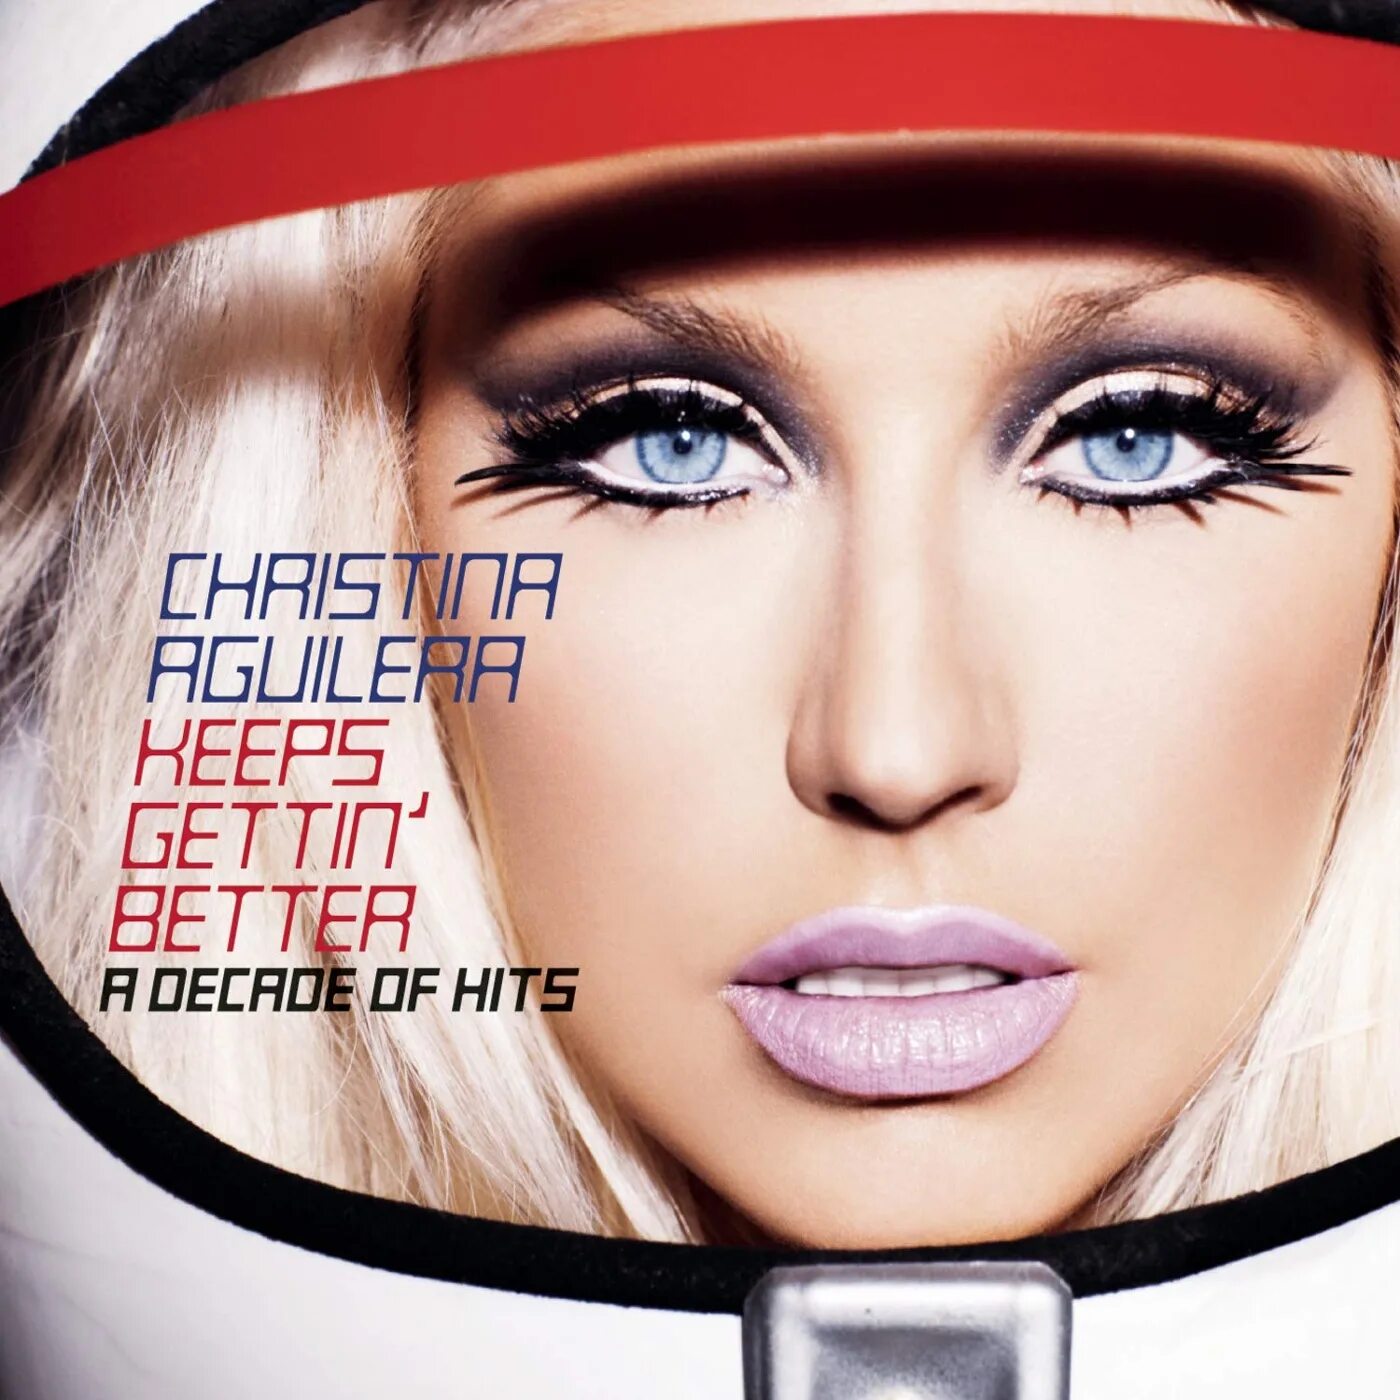 Getting better песня. Christina Aguilera обложки альбомов. Christina Aguilera keeps Gettin’ better: a decade of Hits обложка. Christina Aguilera ‎– keeps Gettin' better album.